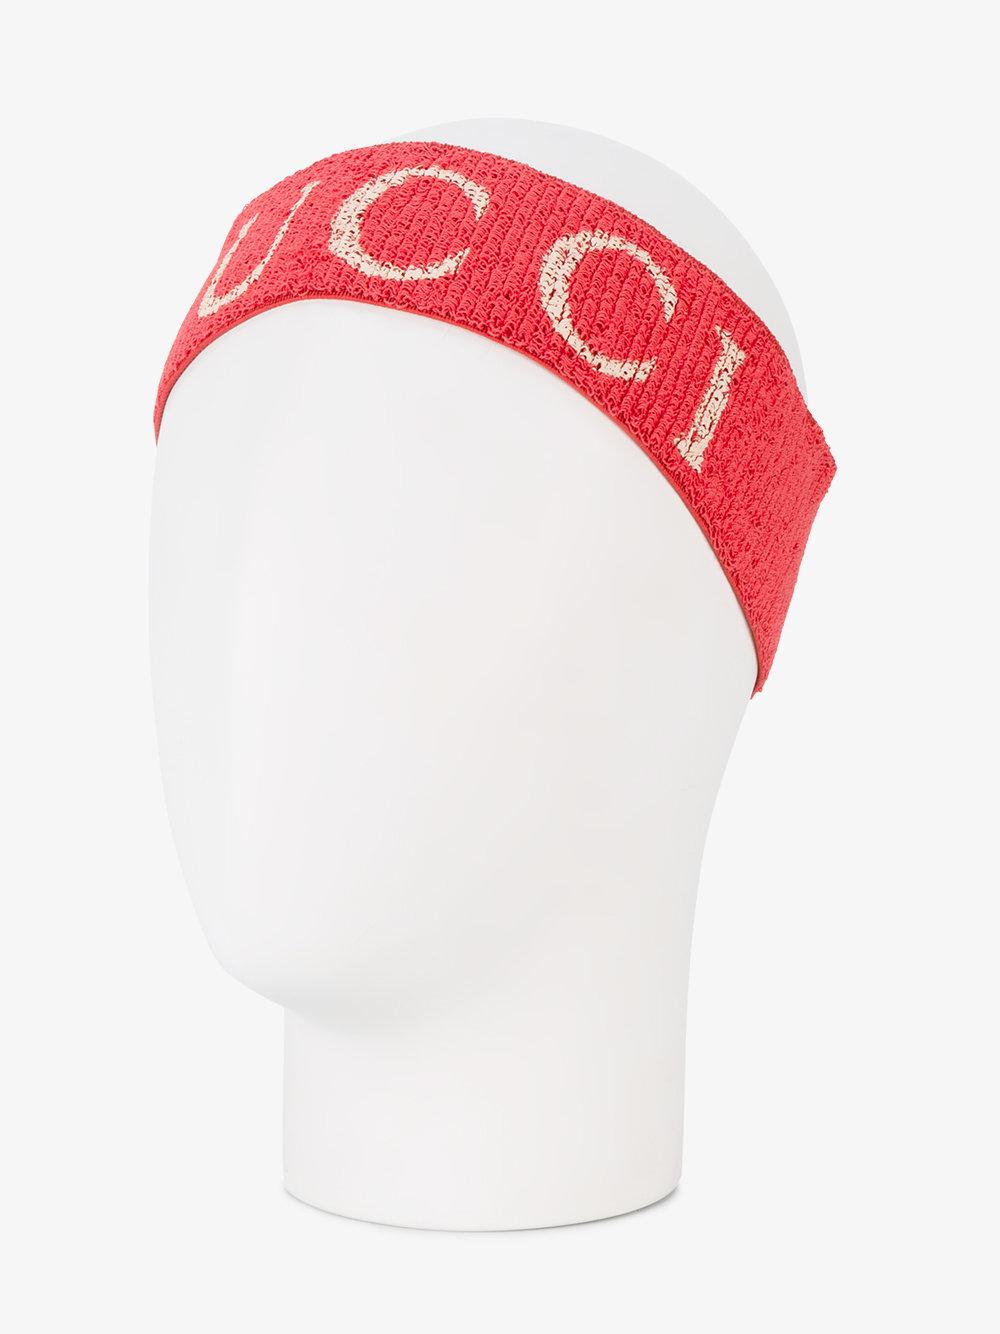 gucci headband red